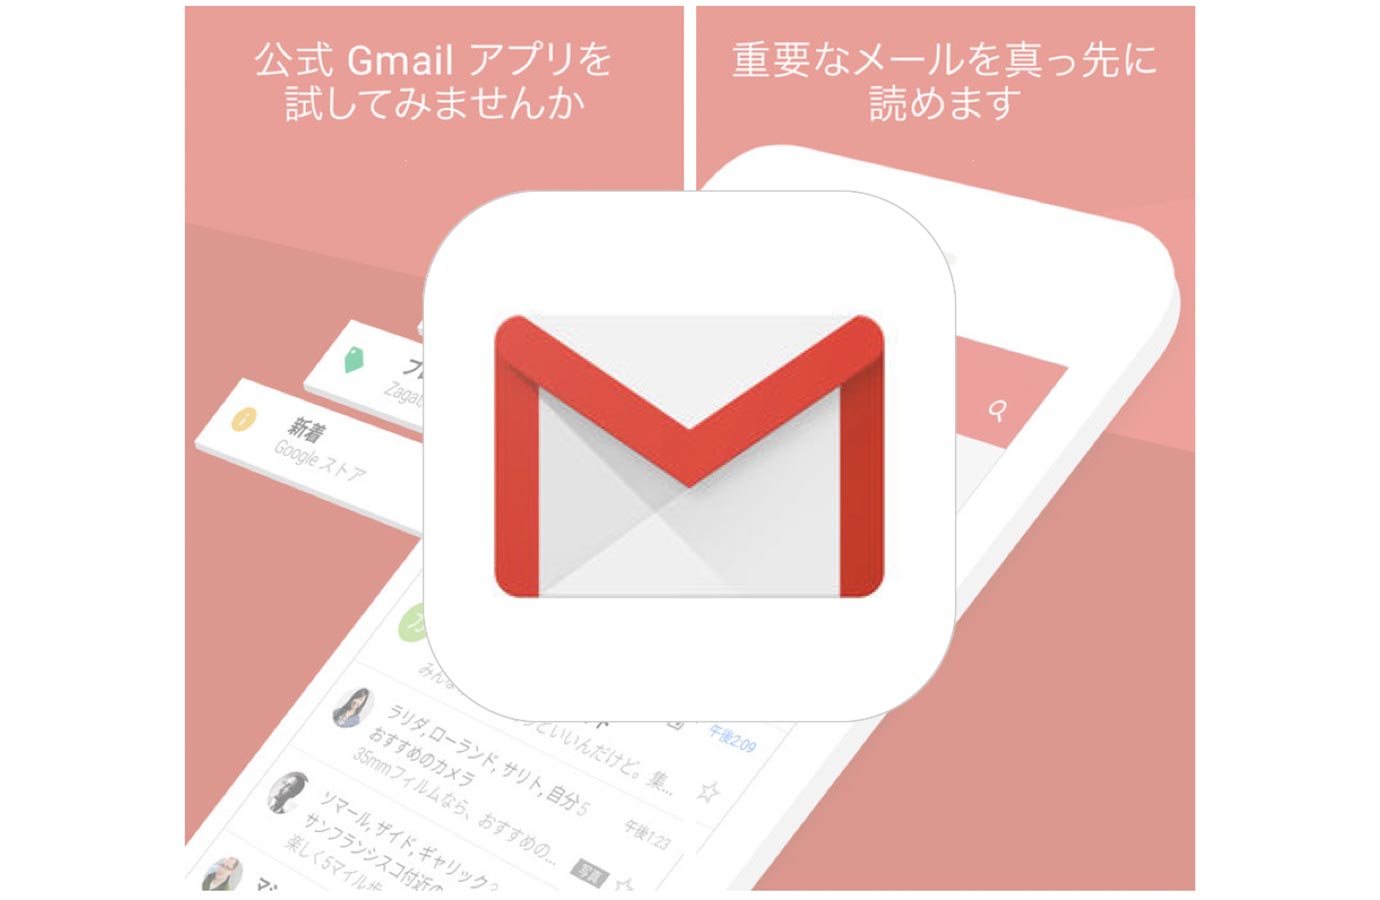 Gmailapp